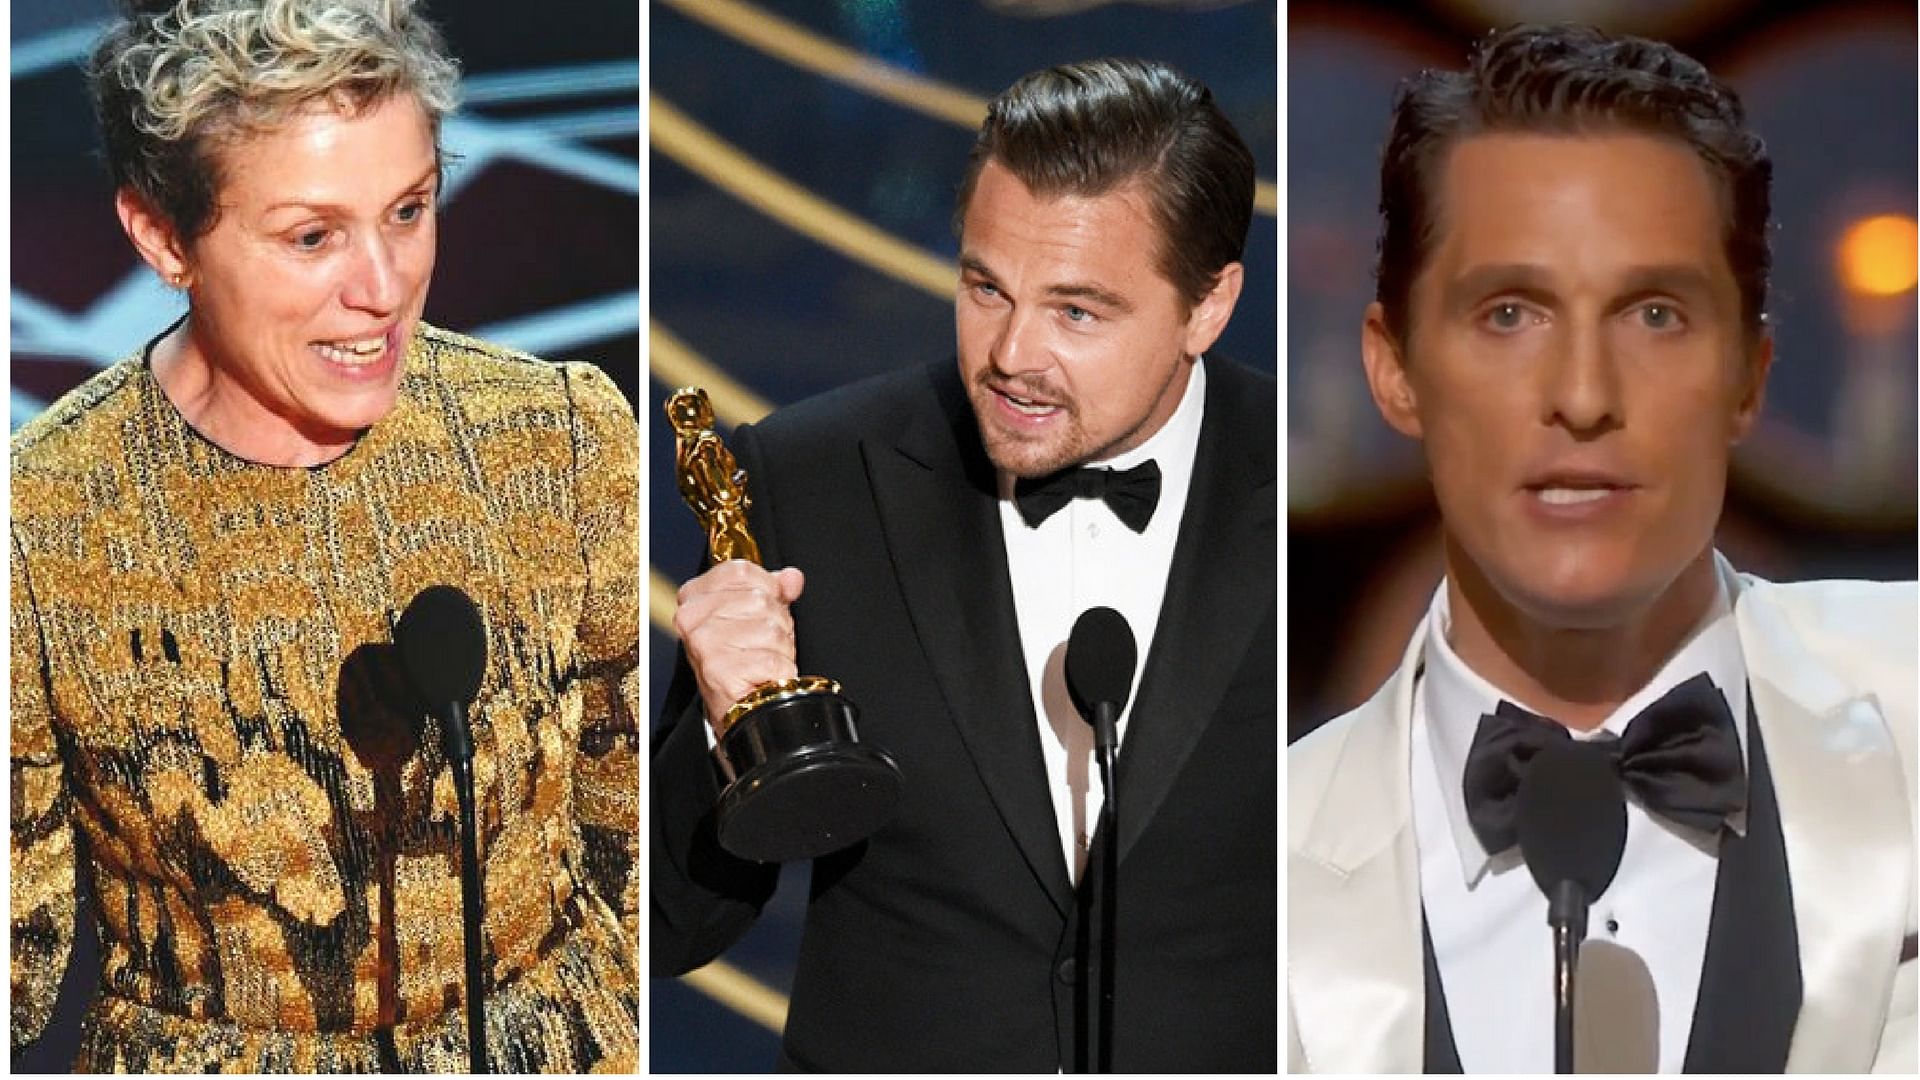 Frances McDormand, Matthew McConaughey, and Leonardo Di Caprio at the Academy Awards.